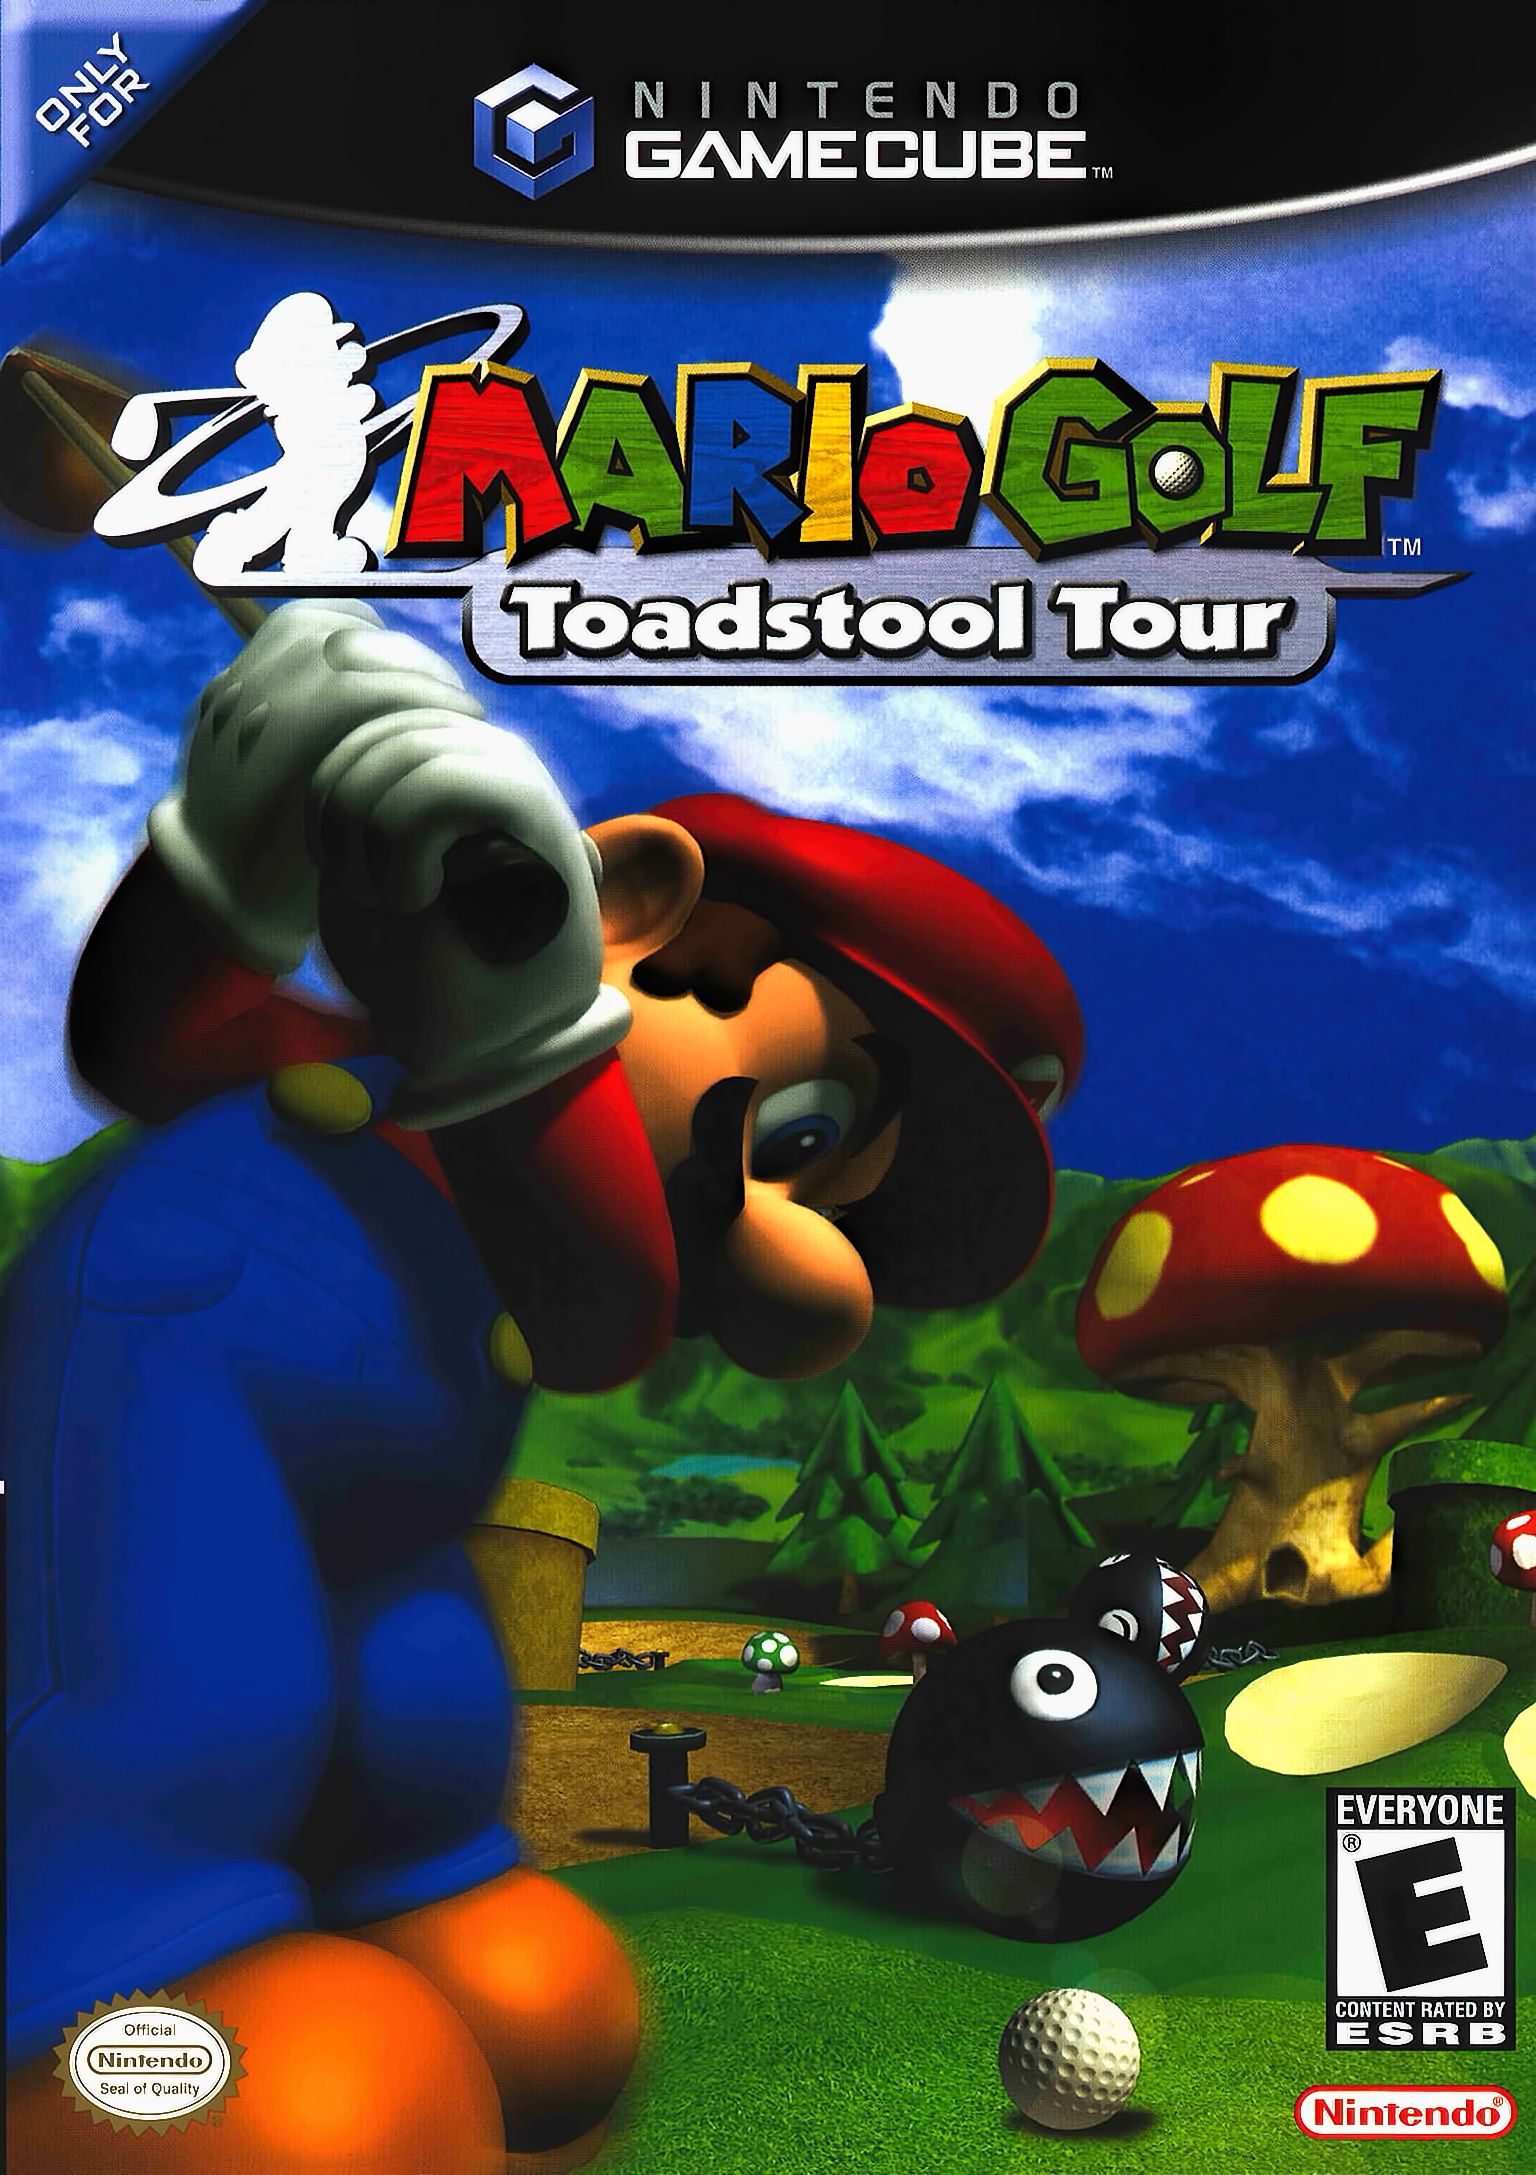 is mario golf toadstool tour good